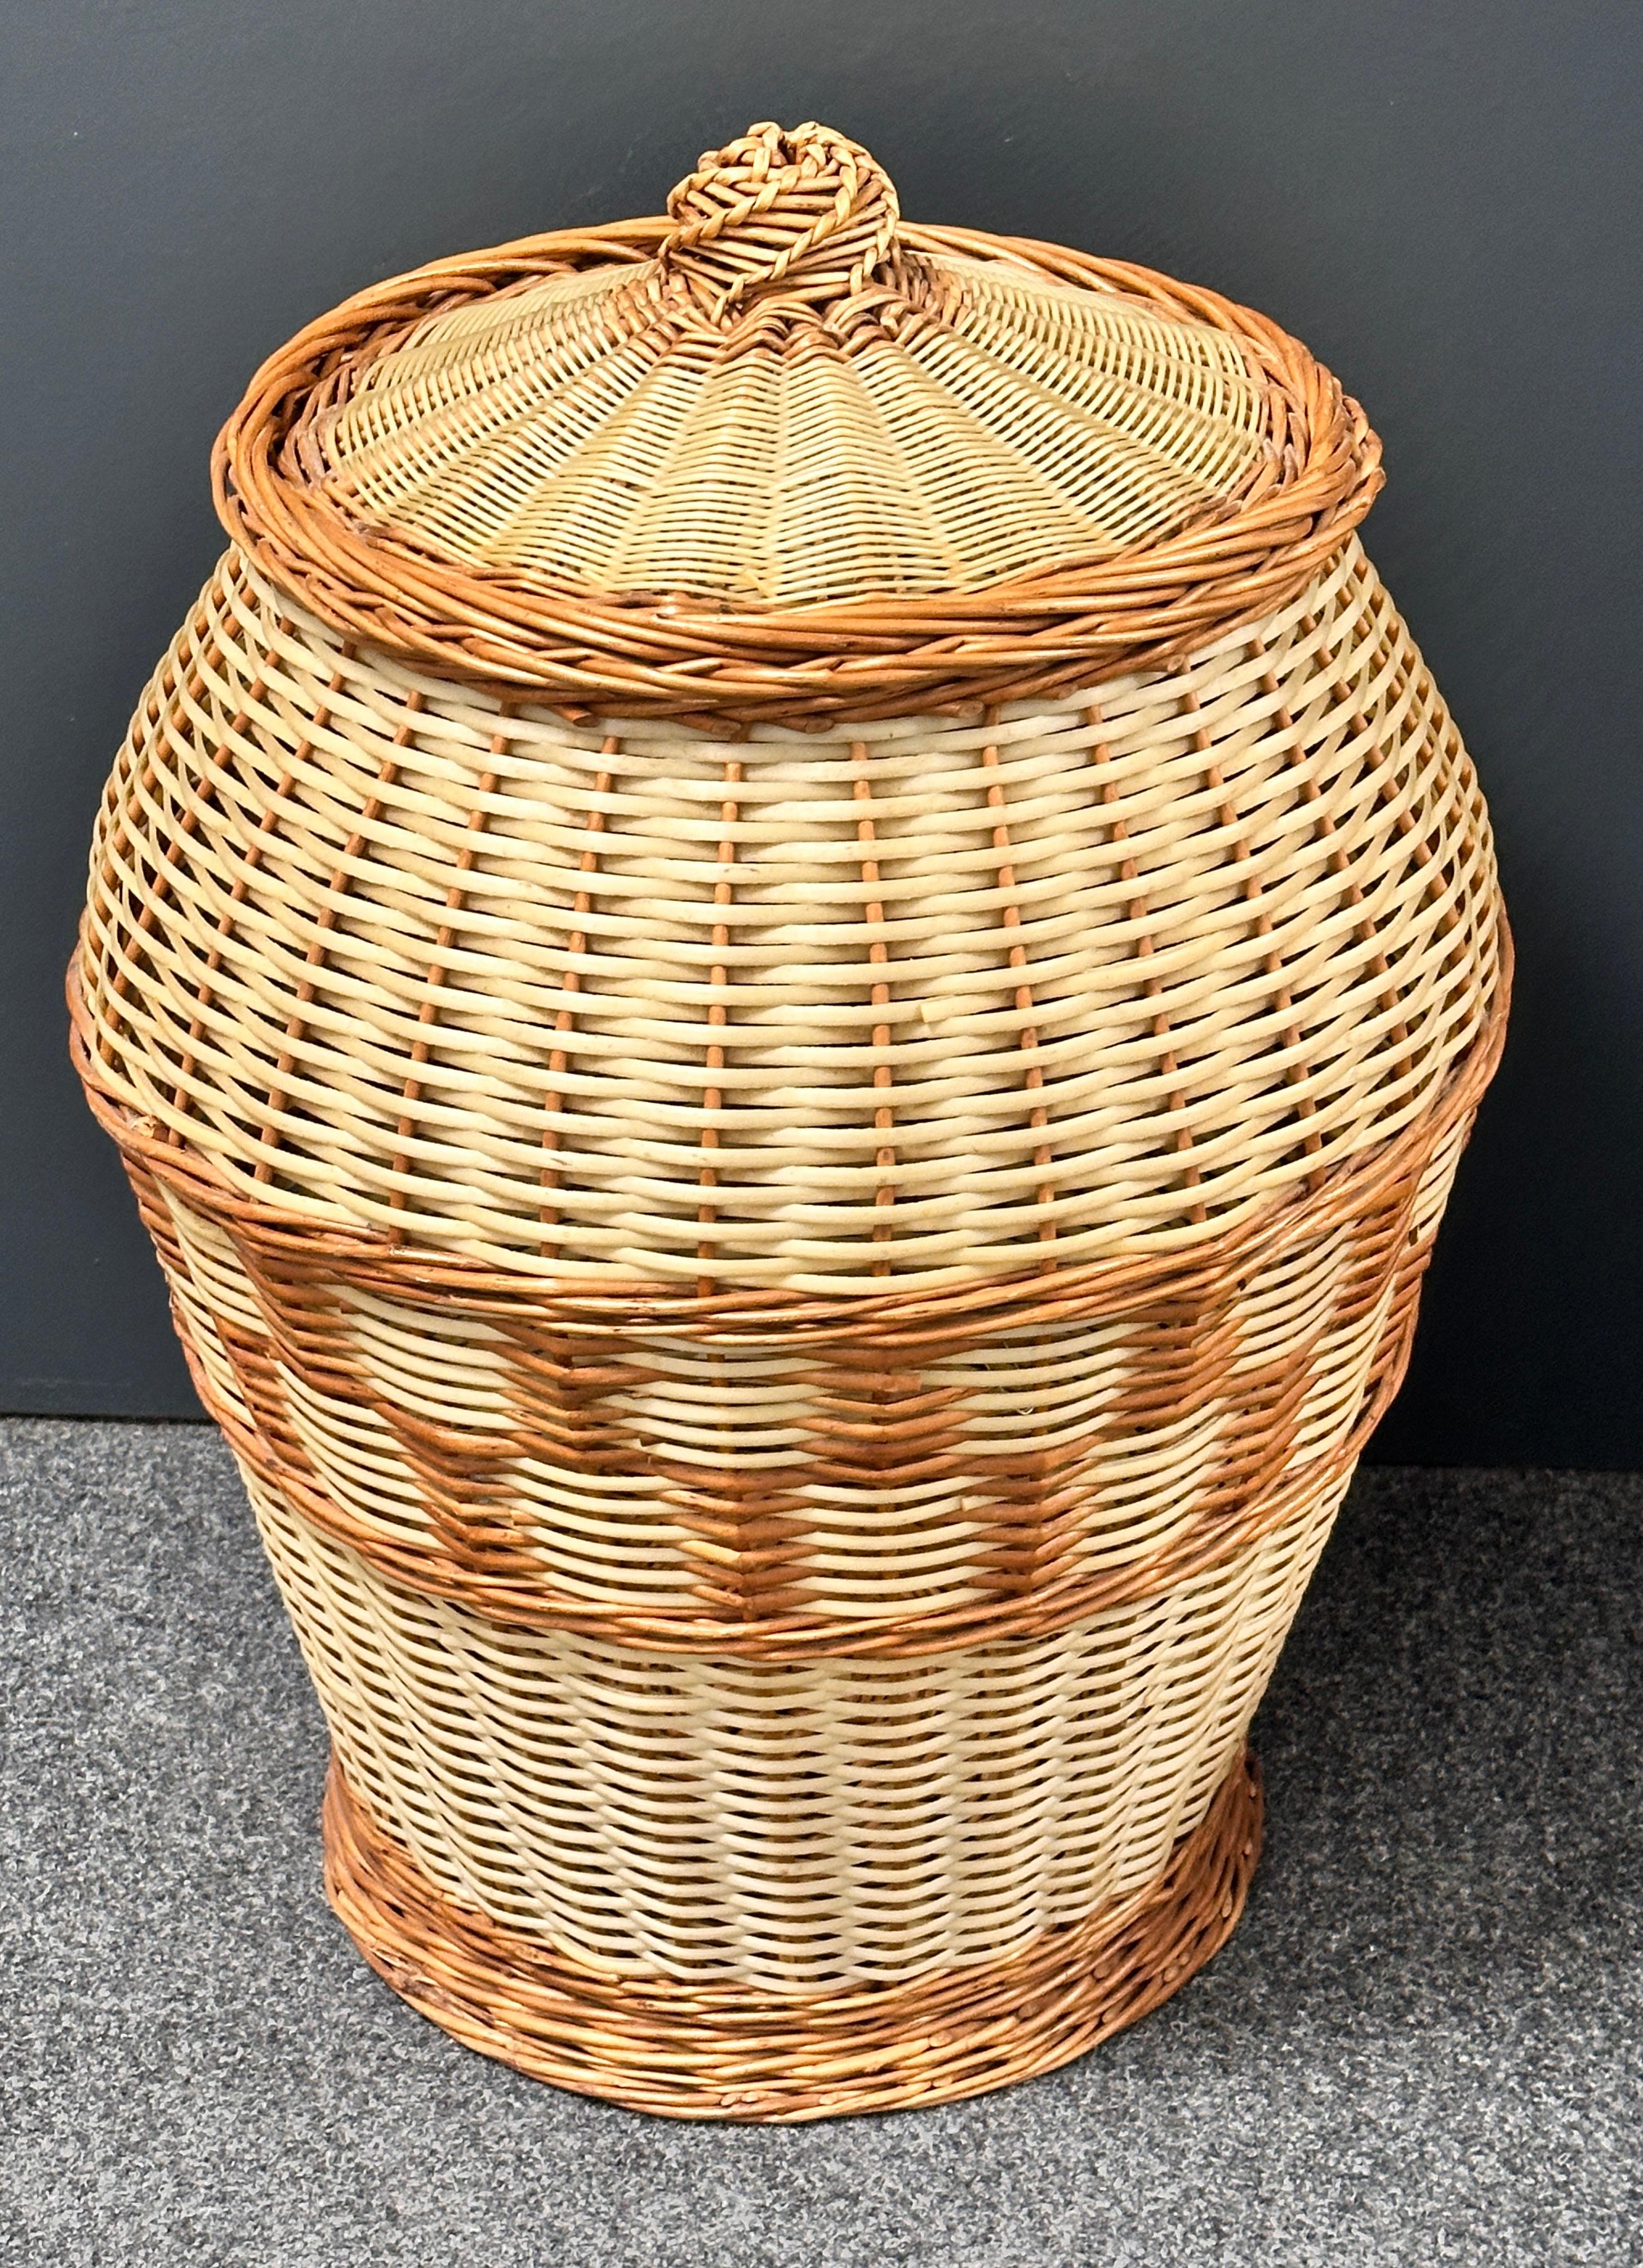 Stunning Large Vintage Midcentury Wicker Laundry Basket Hamper, 1970s, Italy For Sale 2